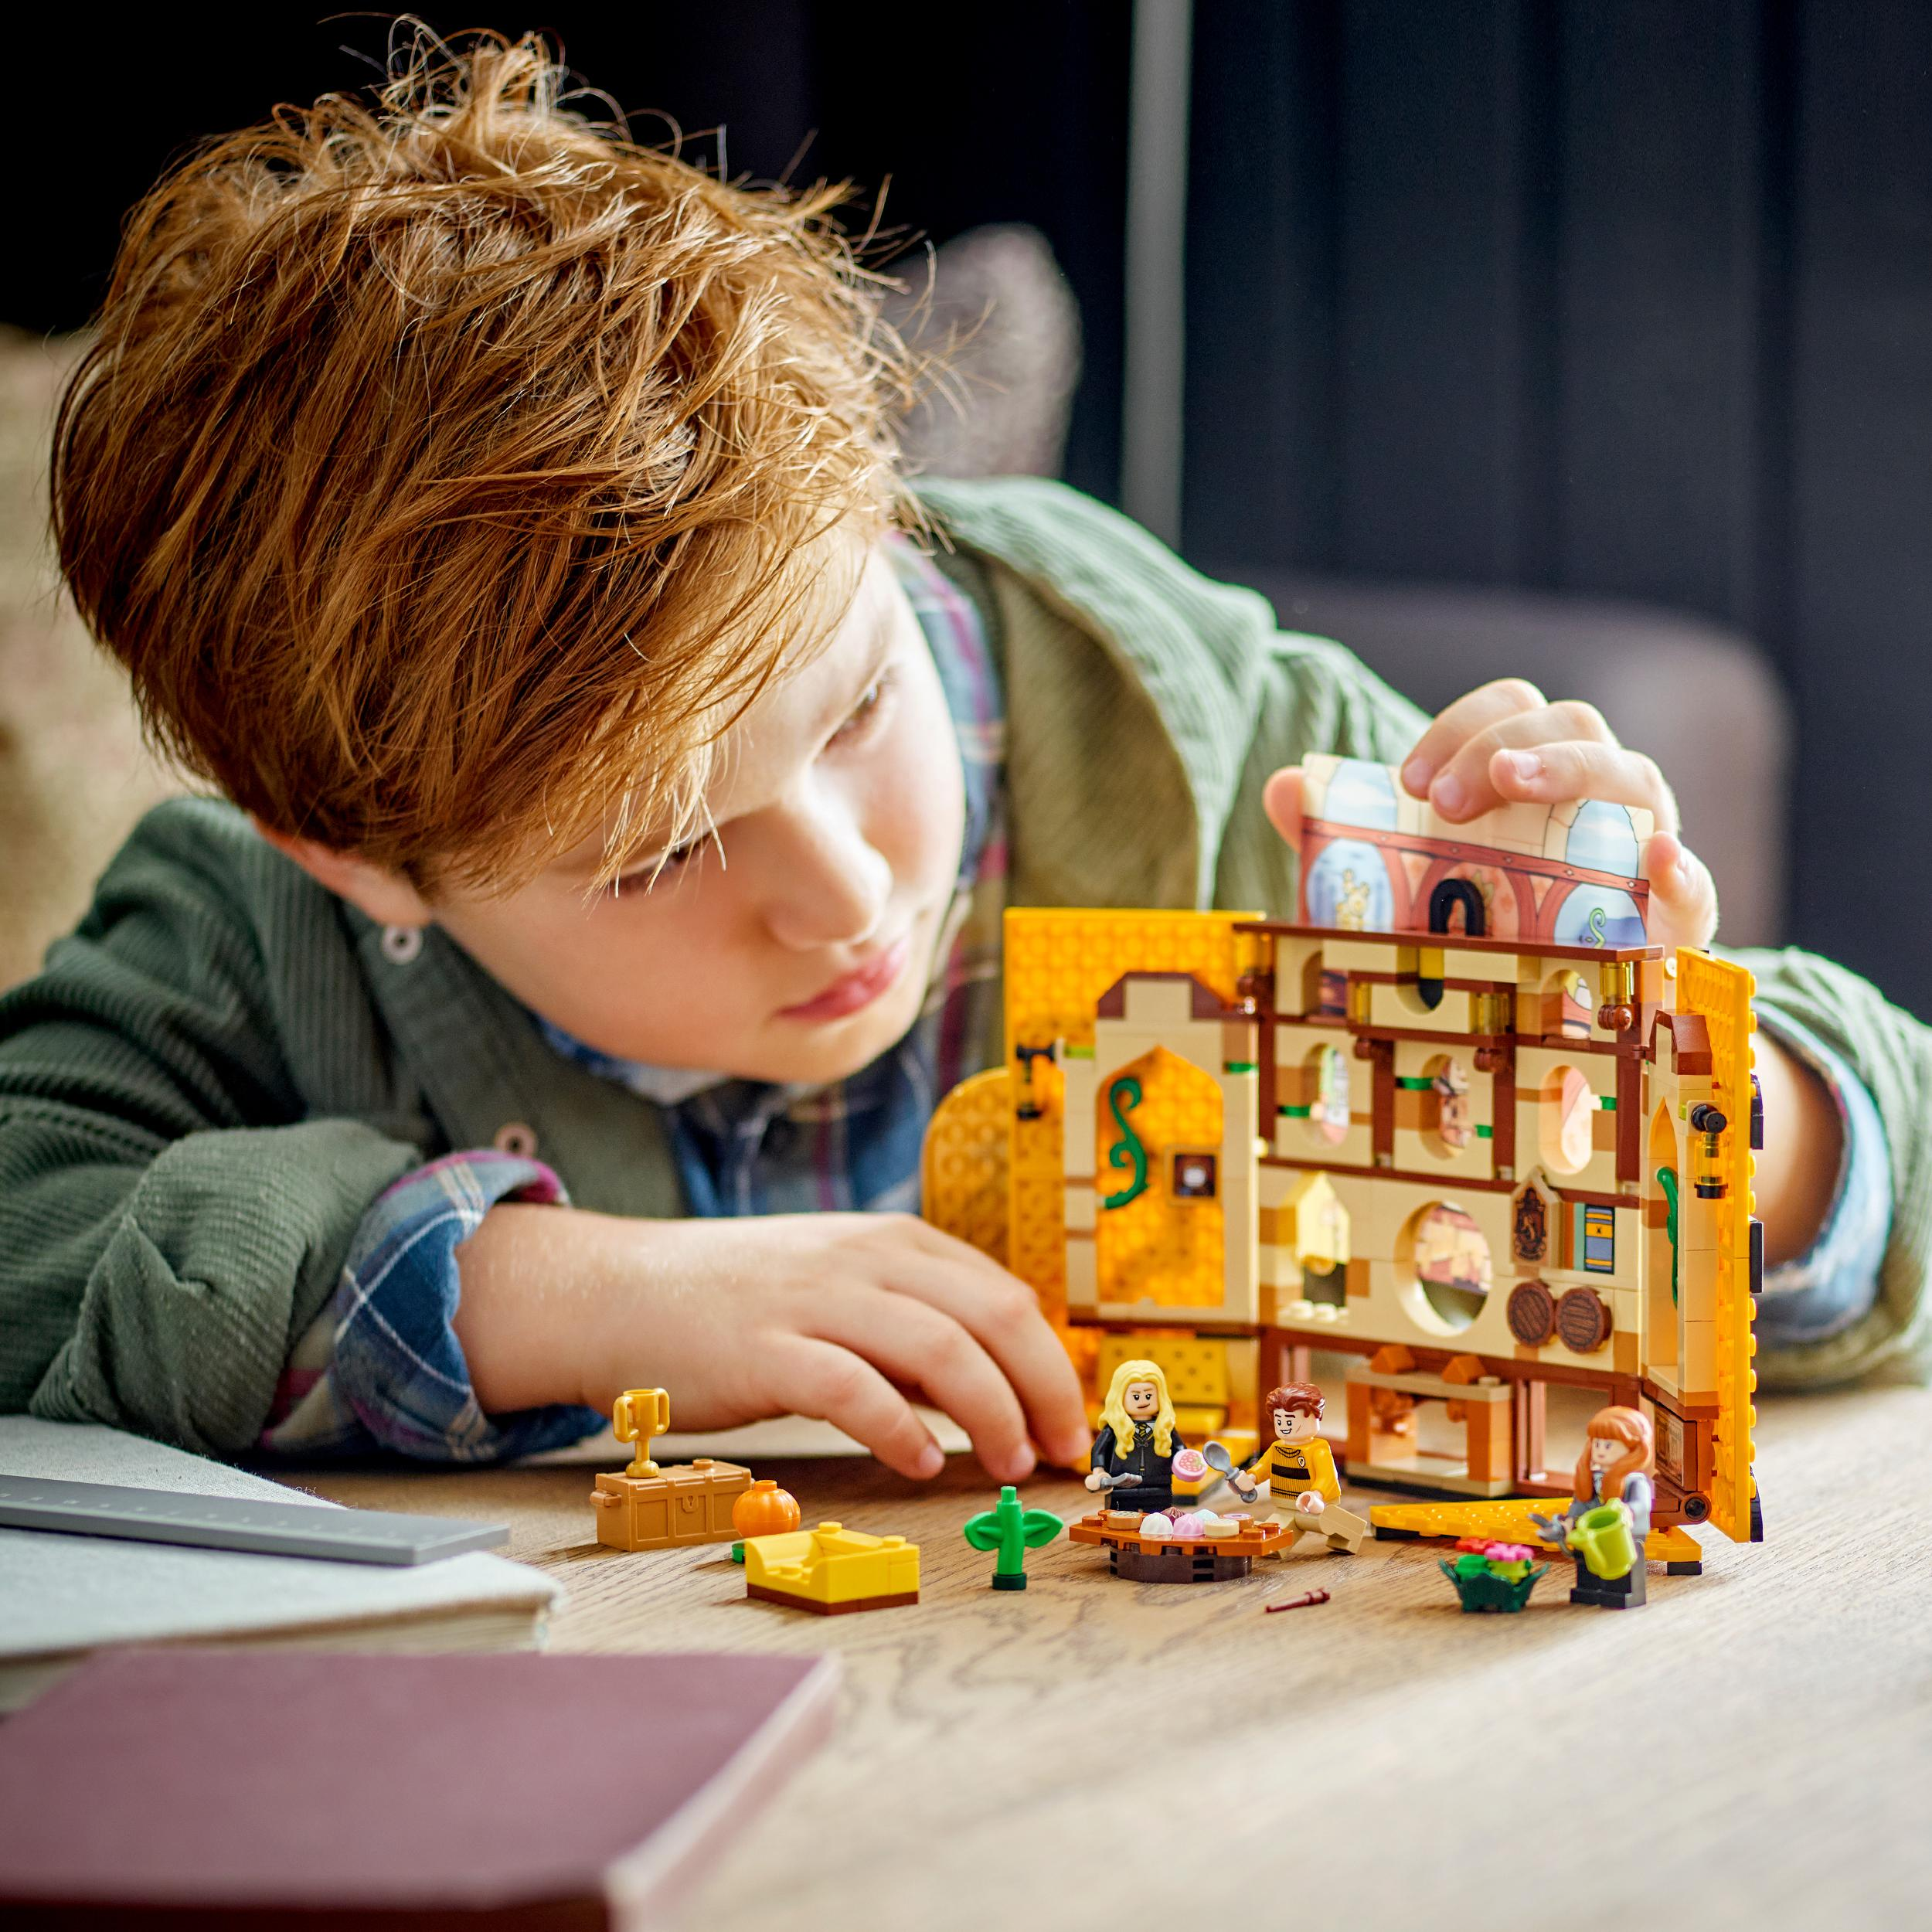 LEGO Harry Potter 76412 Mehrfarbig Bausatz, Hausbanner Hufflepuff